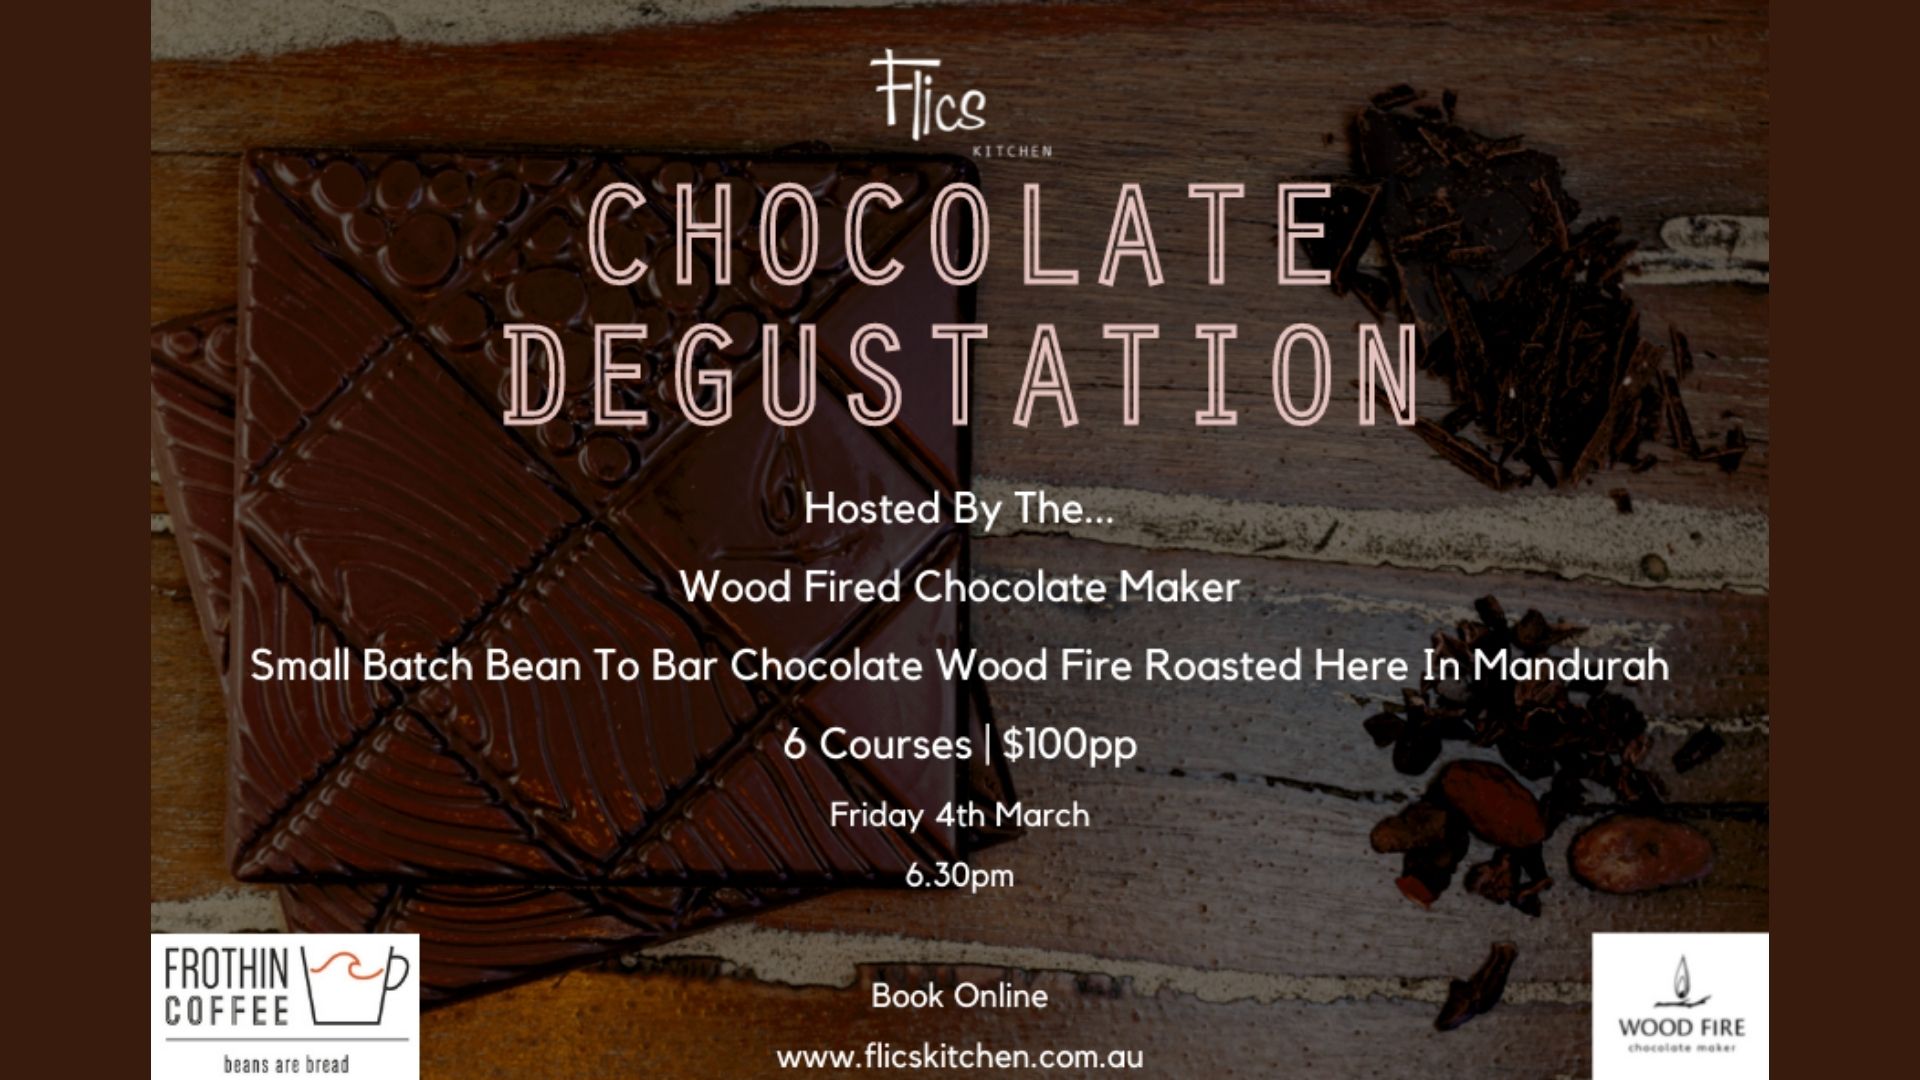 Chocolate Degustation Flics Kitchen Mandurah